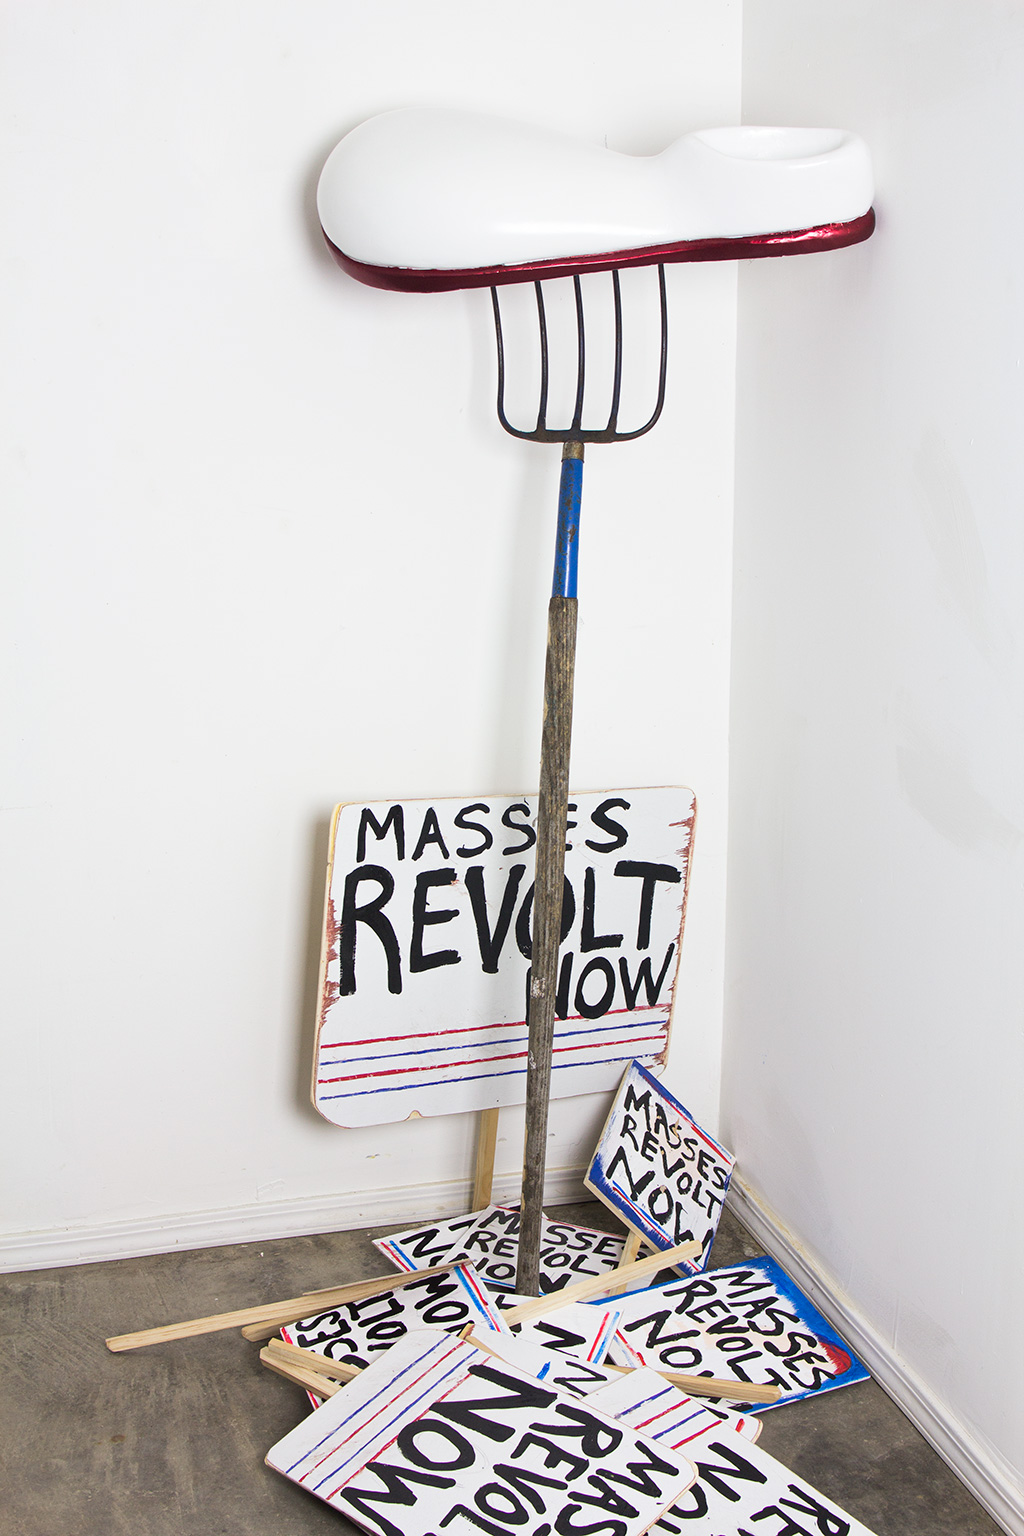 Masses Revolt Now, (installation view) 2014